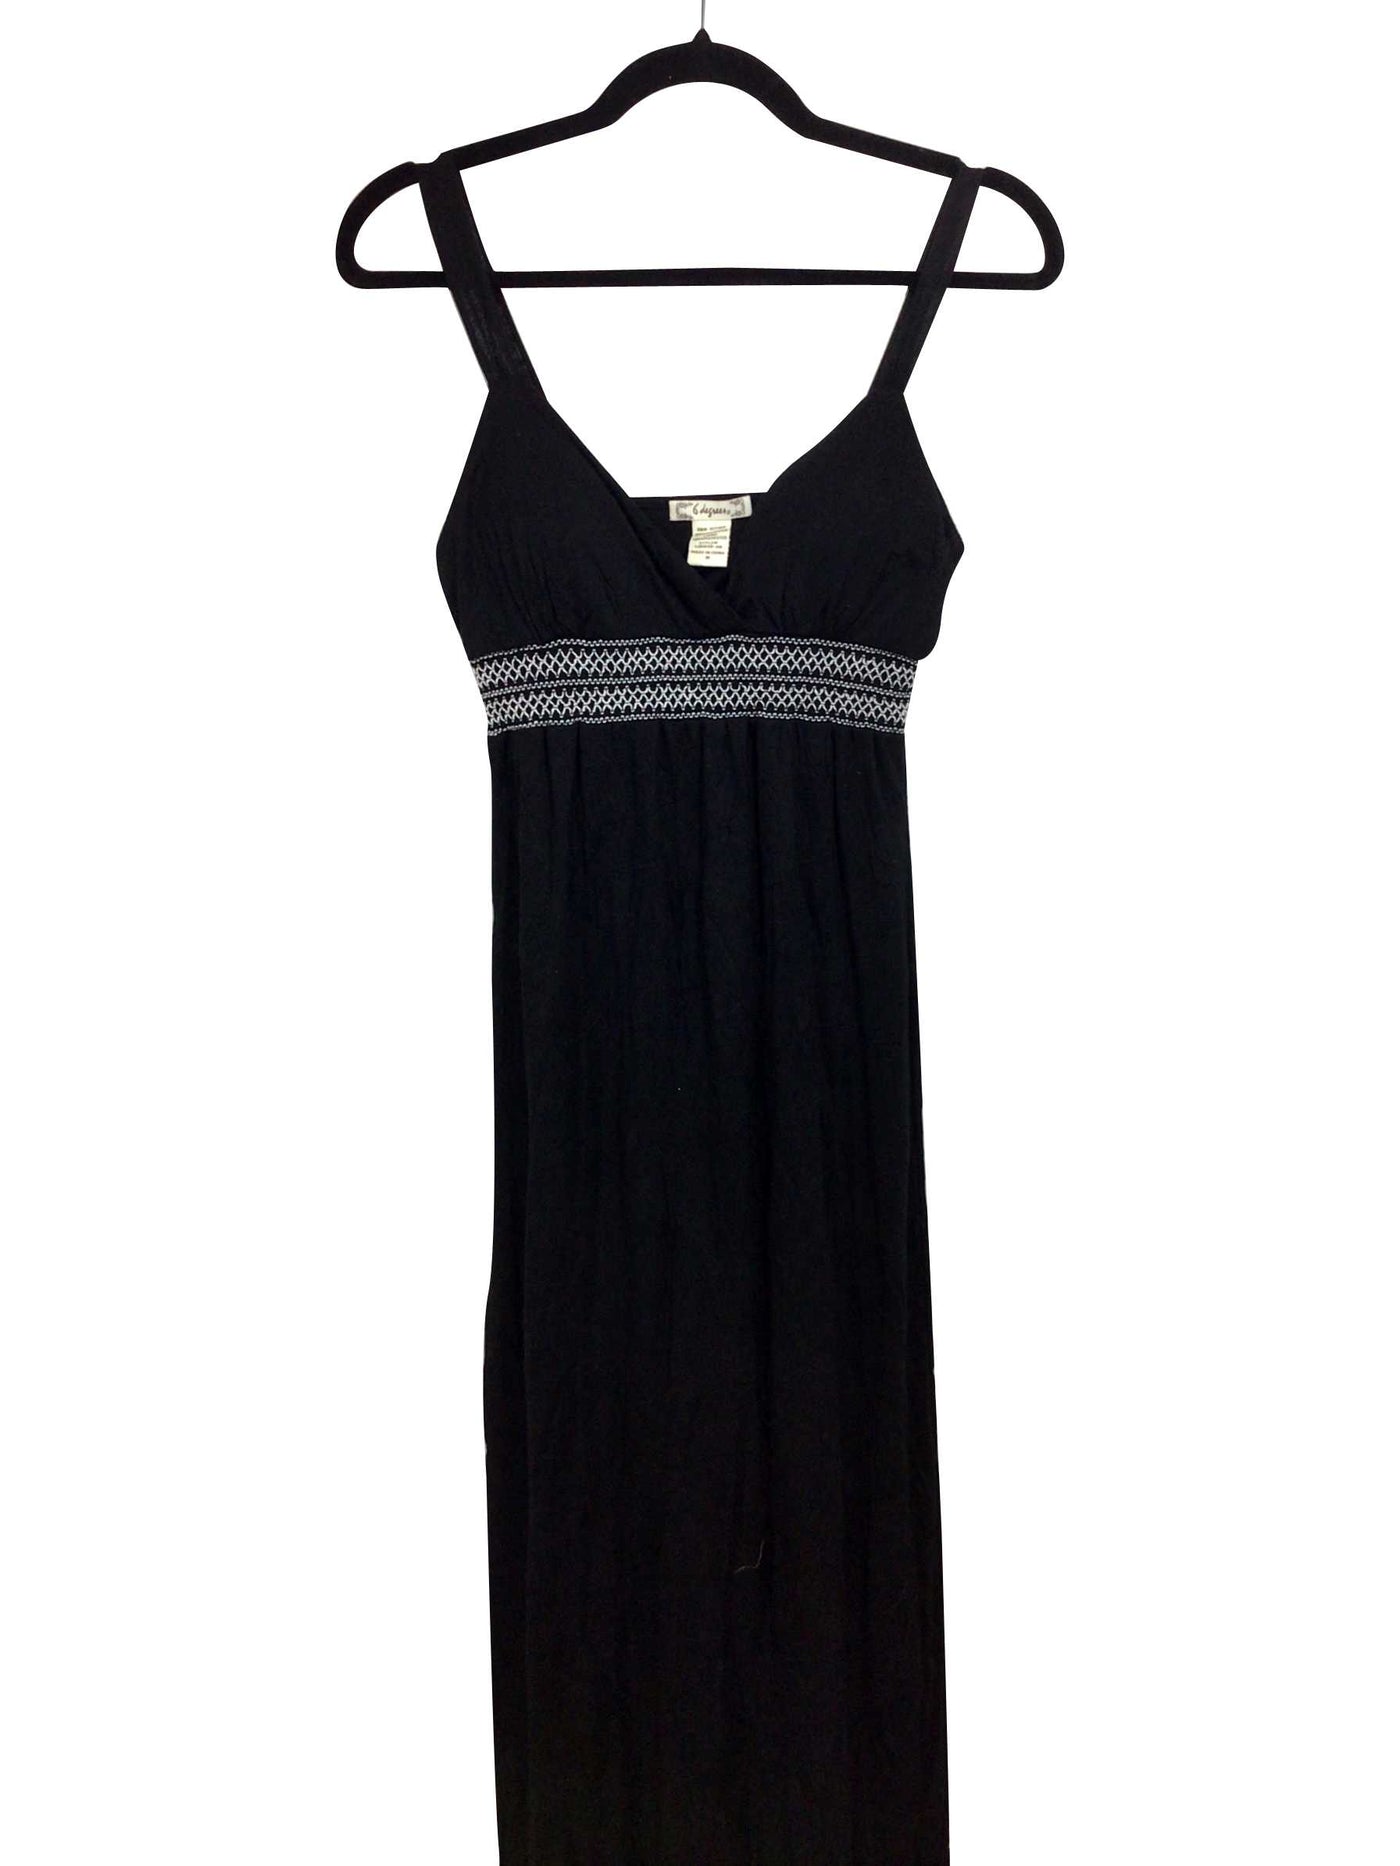 6 DEGREES Regular fit Maxi Dress in Black - Size S | 12.34 $ KOOP